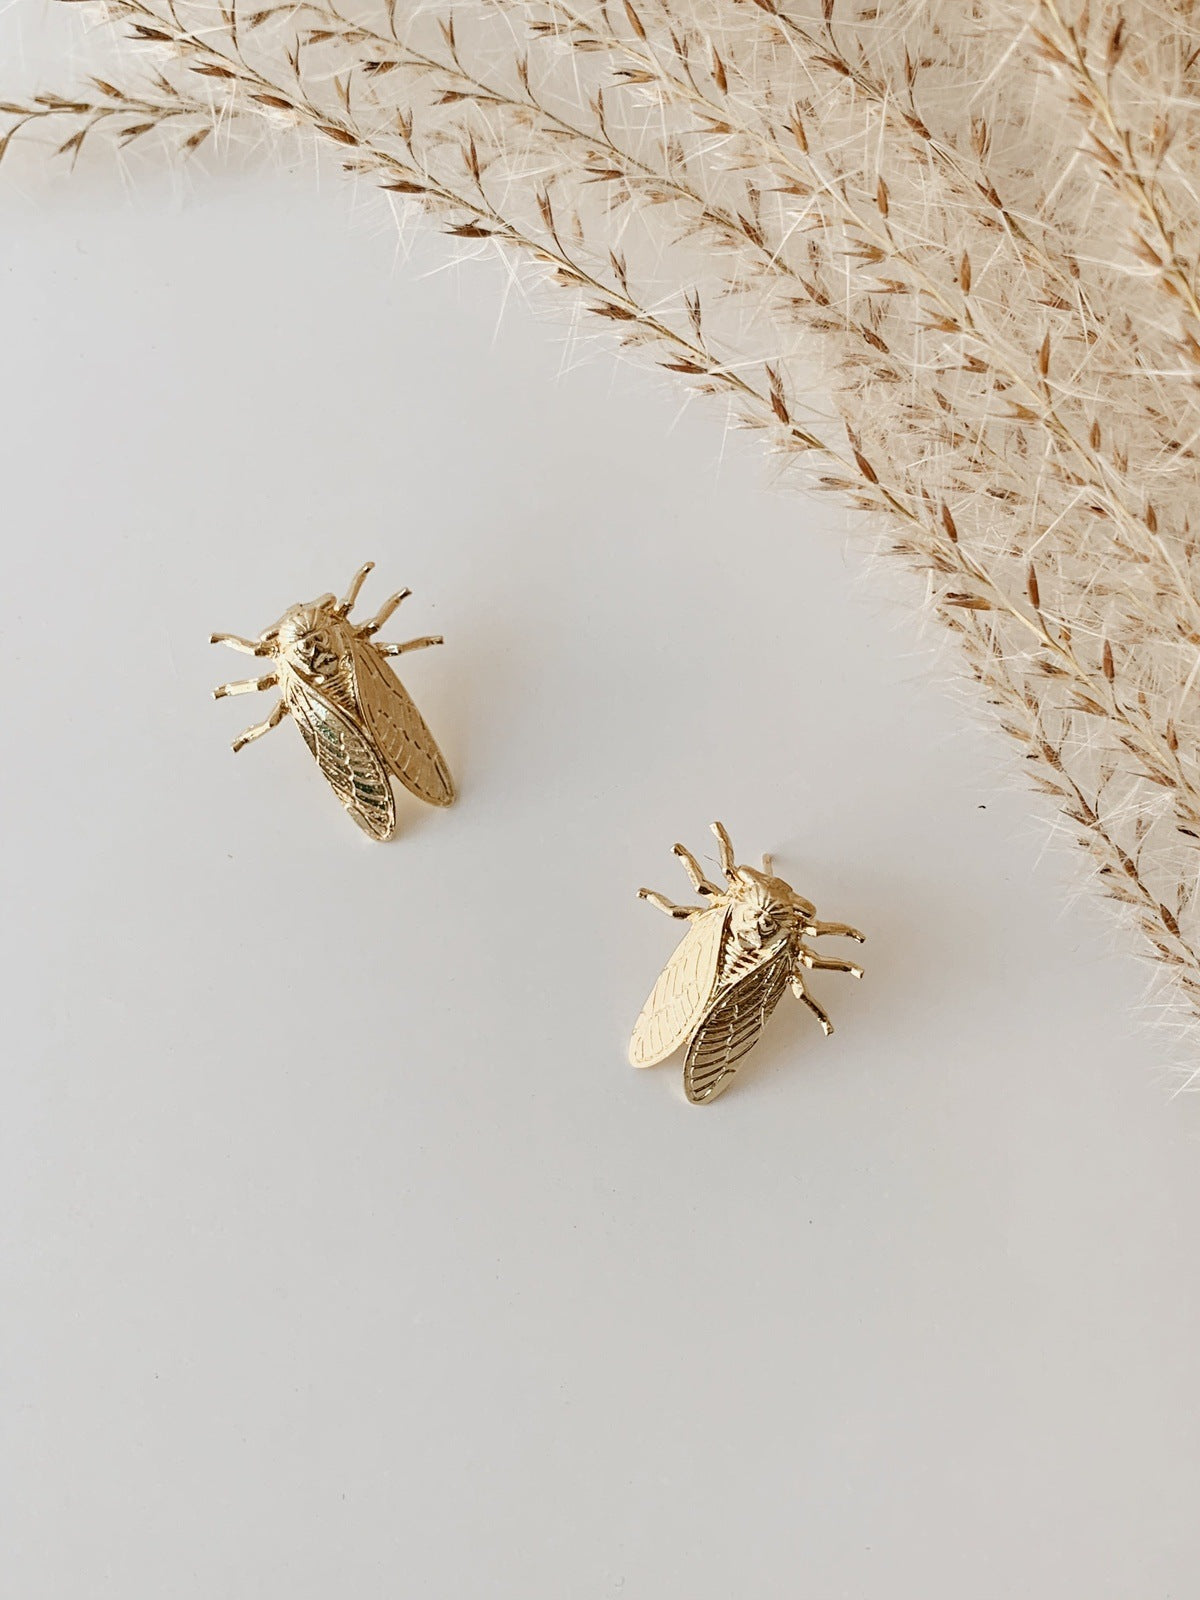 Cicada Earring Studs Earrings